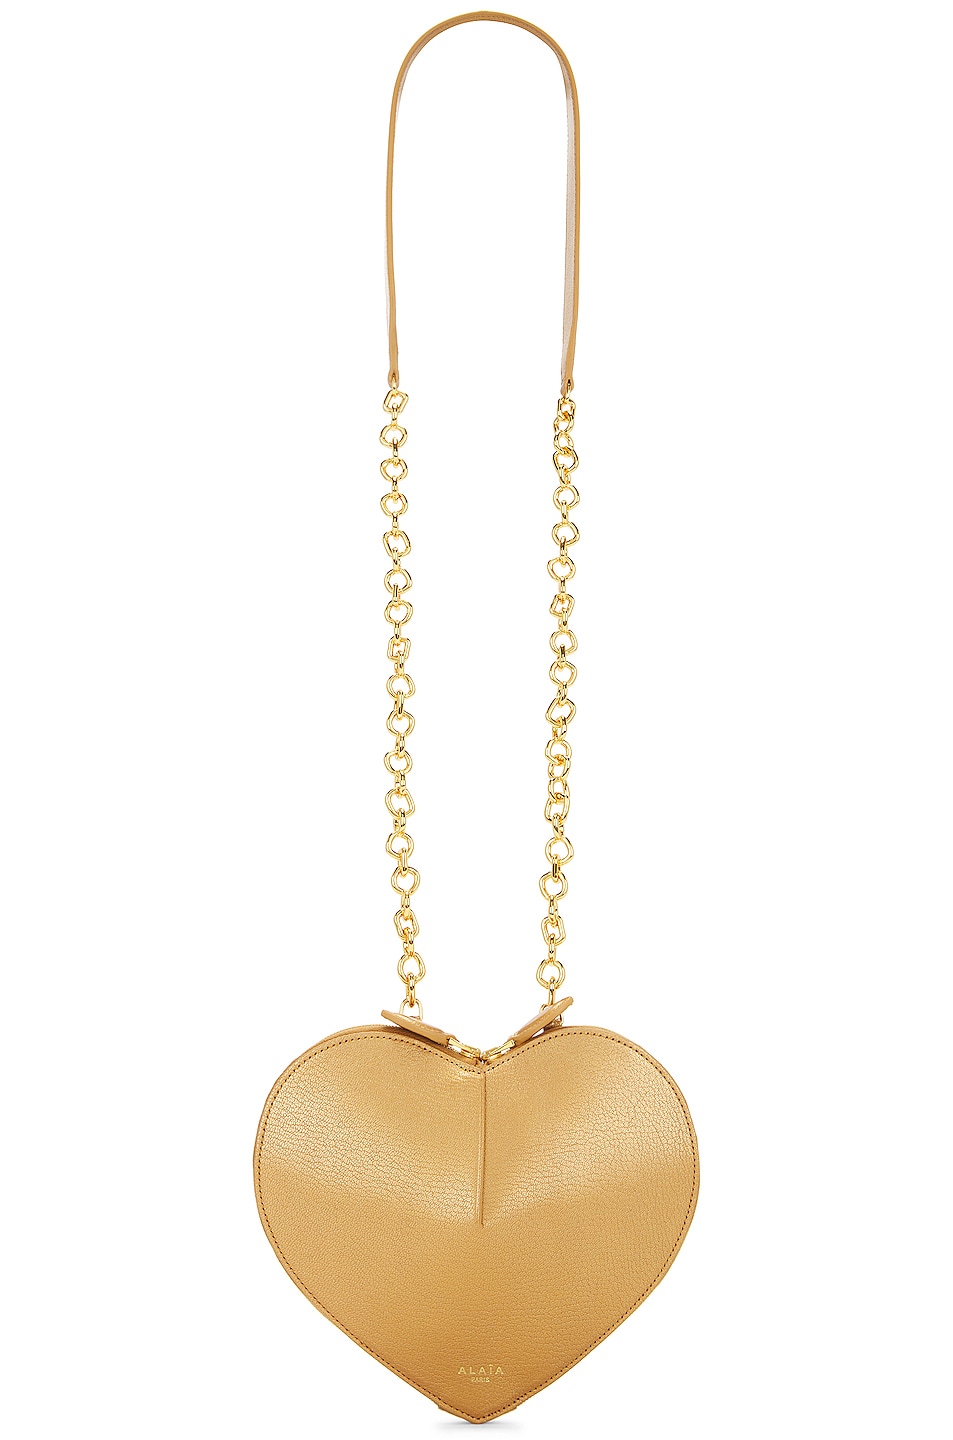 ALAÏA Le Coeur Chain Bag in Metallic Bronze